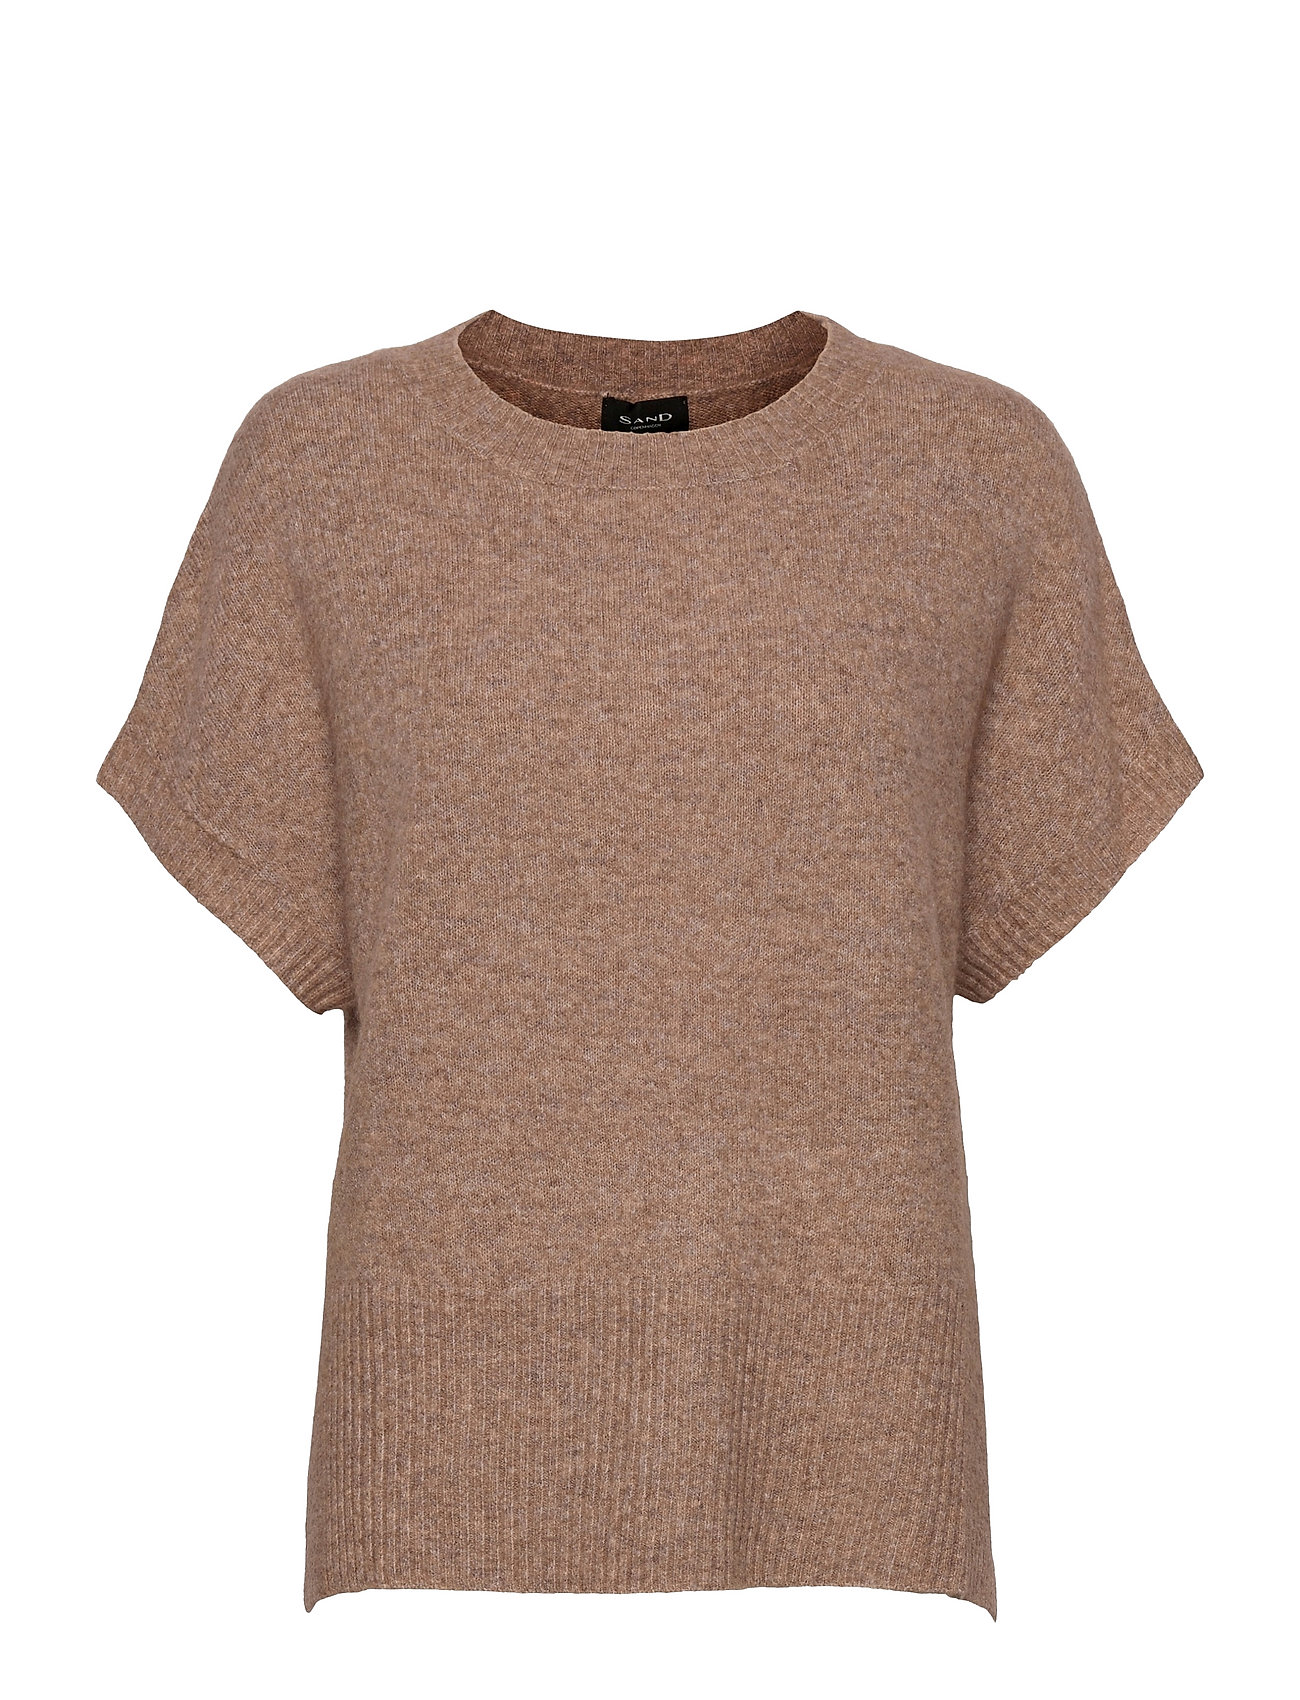 5210 - Izadi S T-shirts & Tops Knitted T-shirts/tops Ruskea SAND